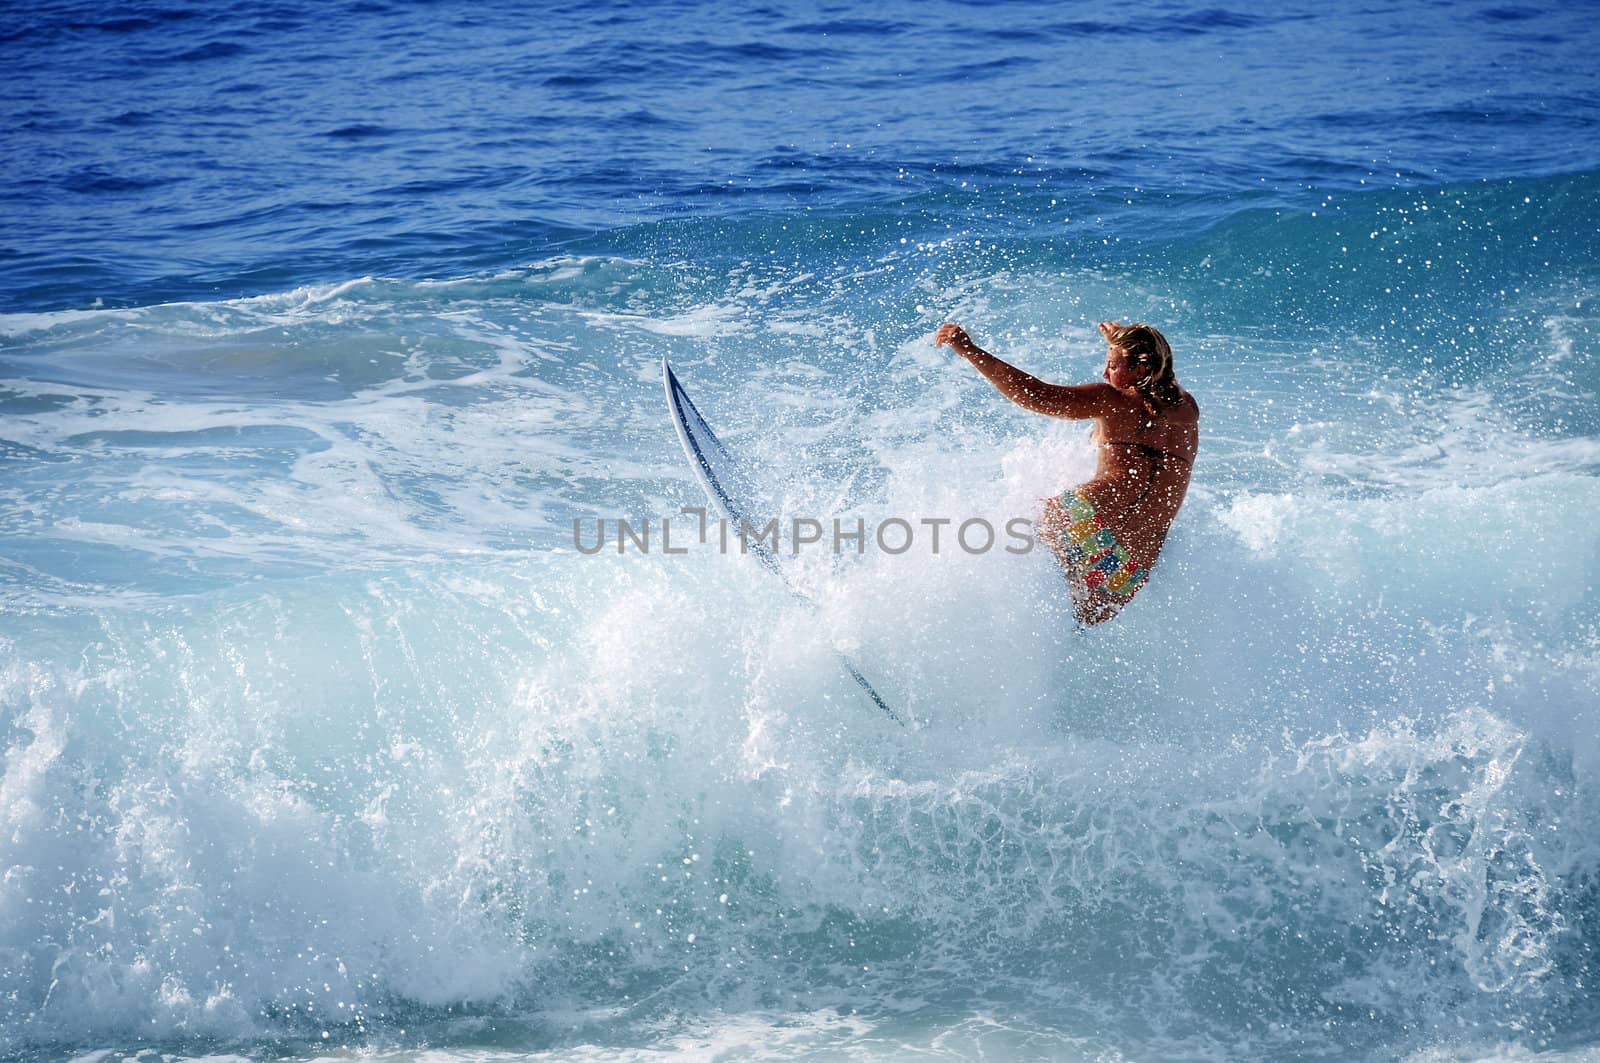 Hawaii, Kauai - Oct 21, 2008: Surfer girl Malia Rimavicus crashes into a wave at training